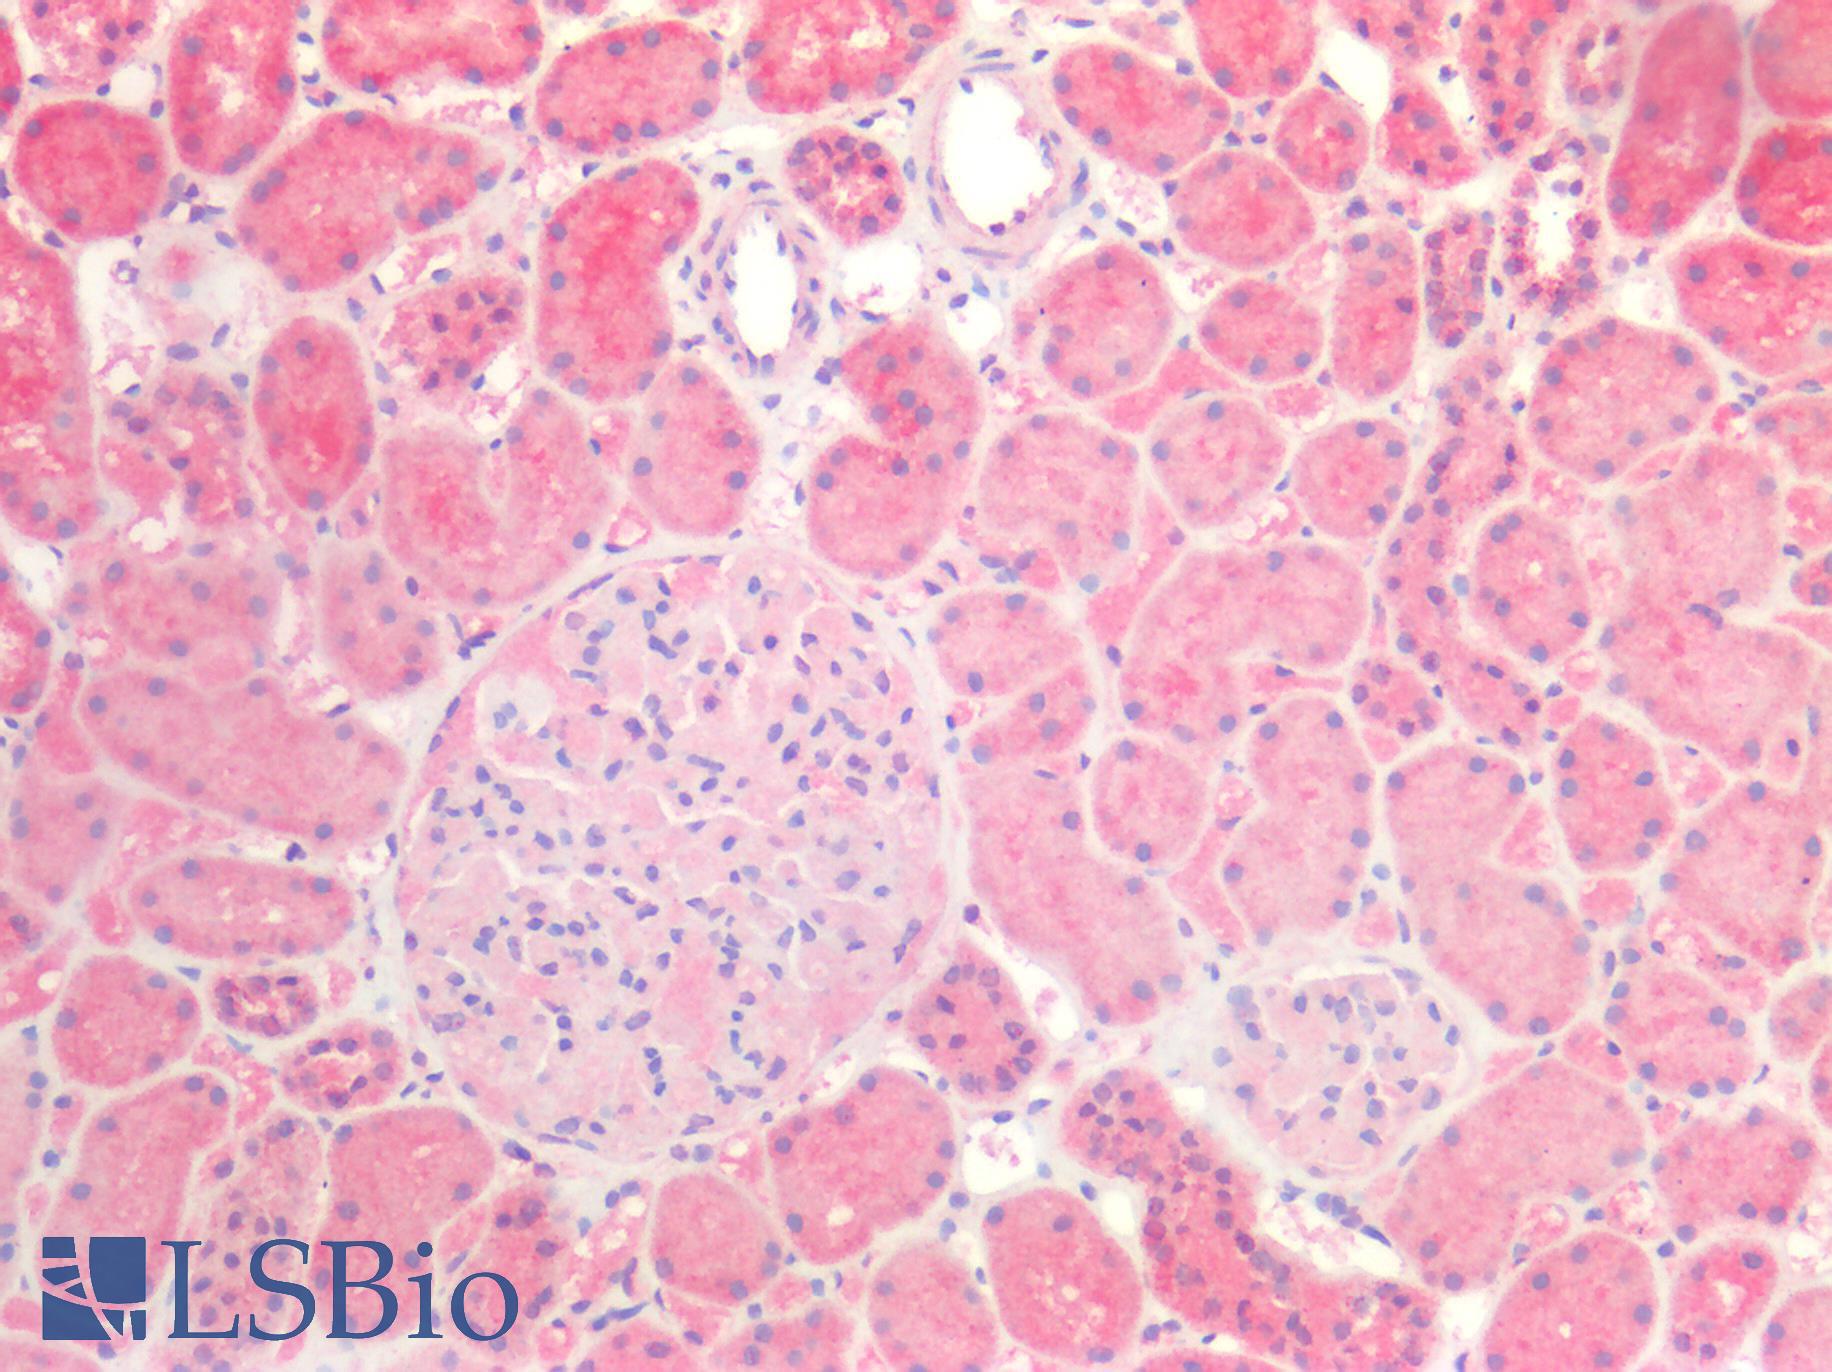 CLDN3 / Claudin 3 Antibody - Human Kidney: Formalin-Fixed, Paraffin-Embedded (FFPE)